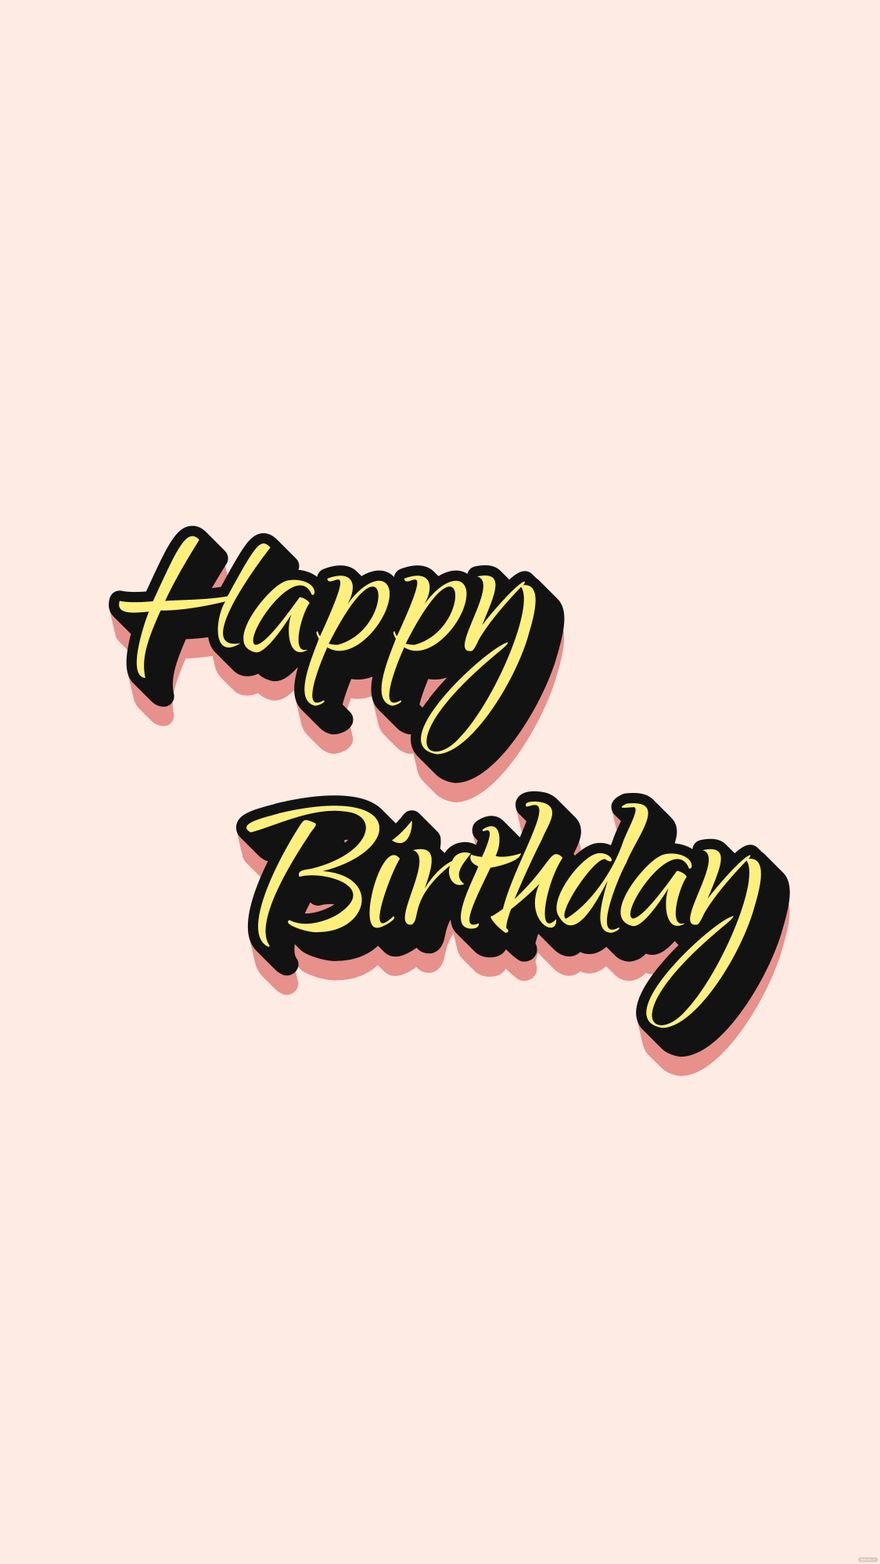 Free Happy Birthday Typography Mobile Background